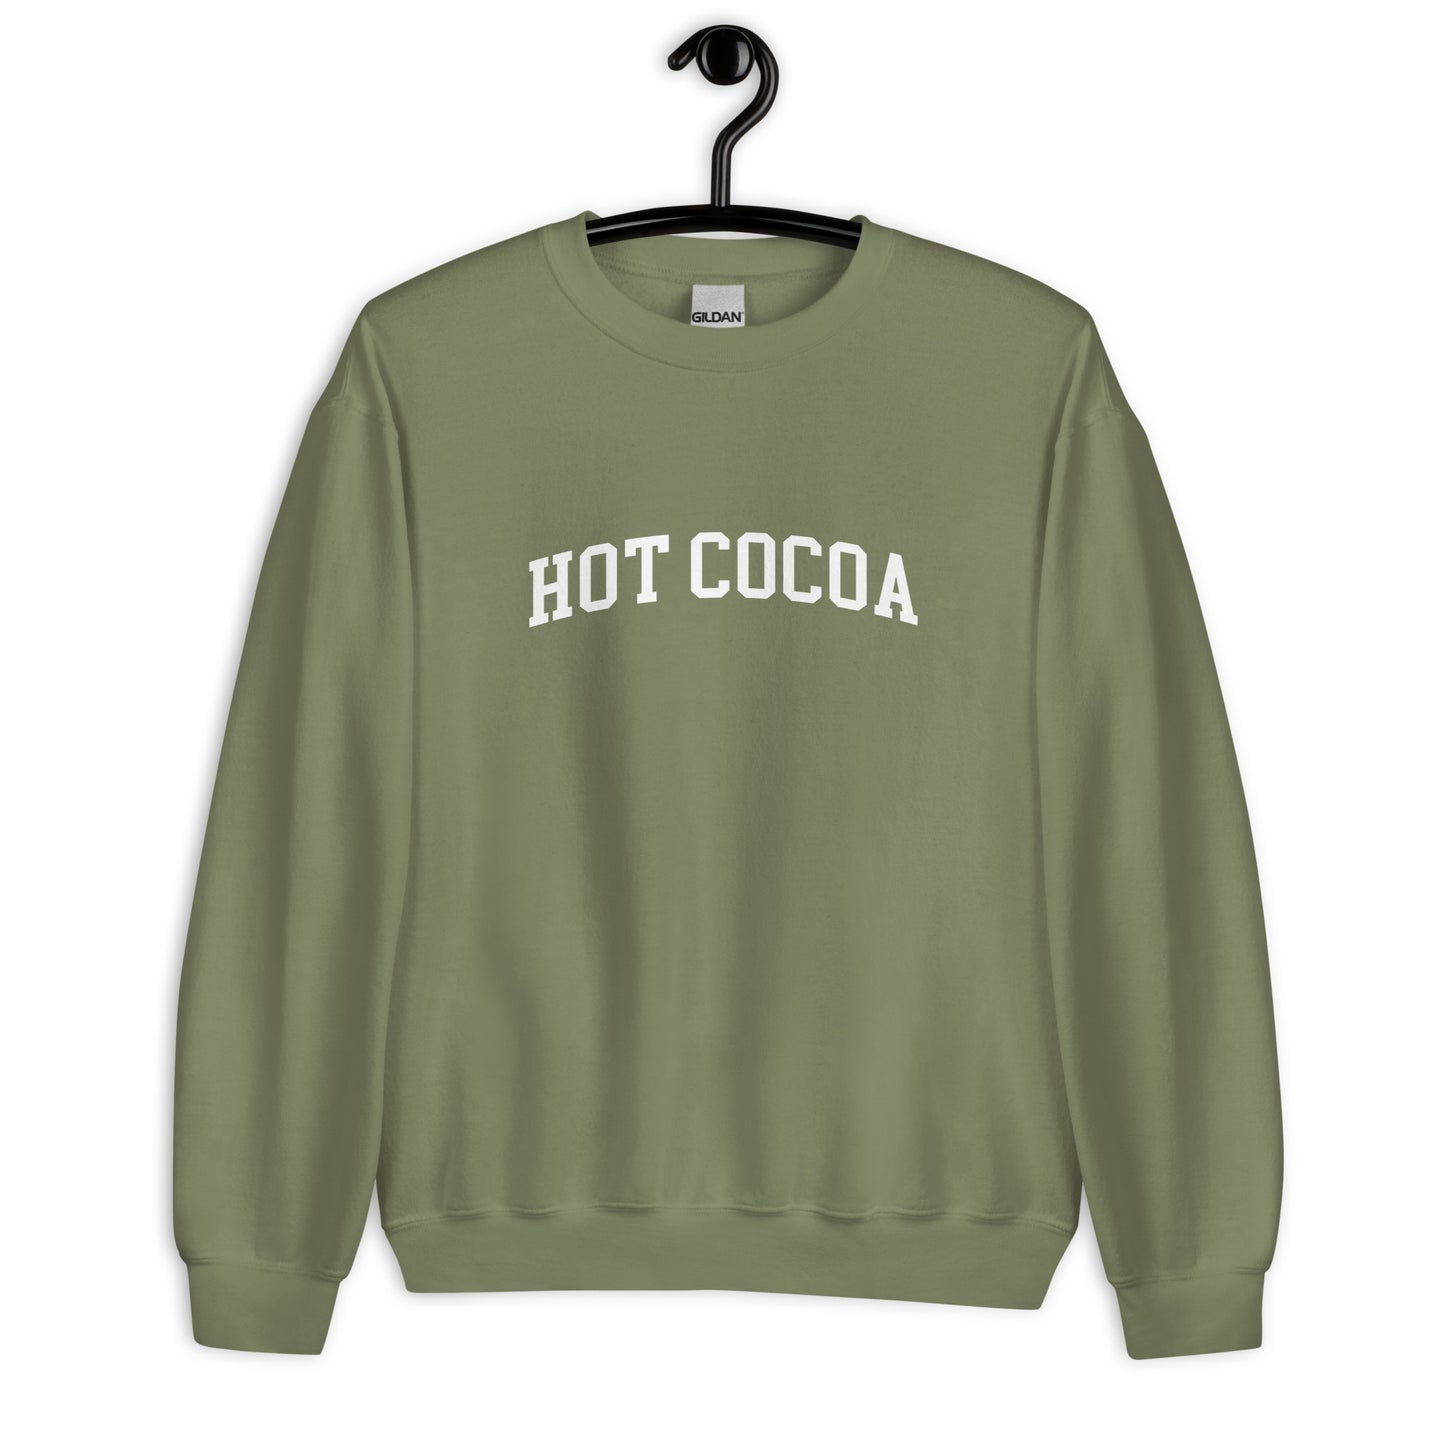 Hot Cocoa Sweatshirt - Arched Font